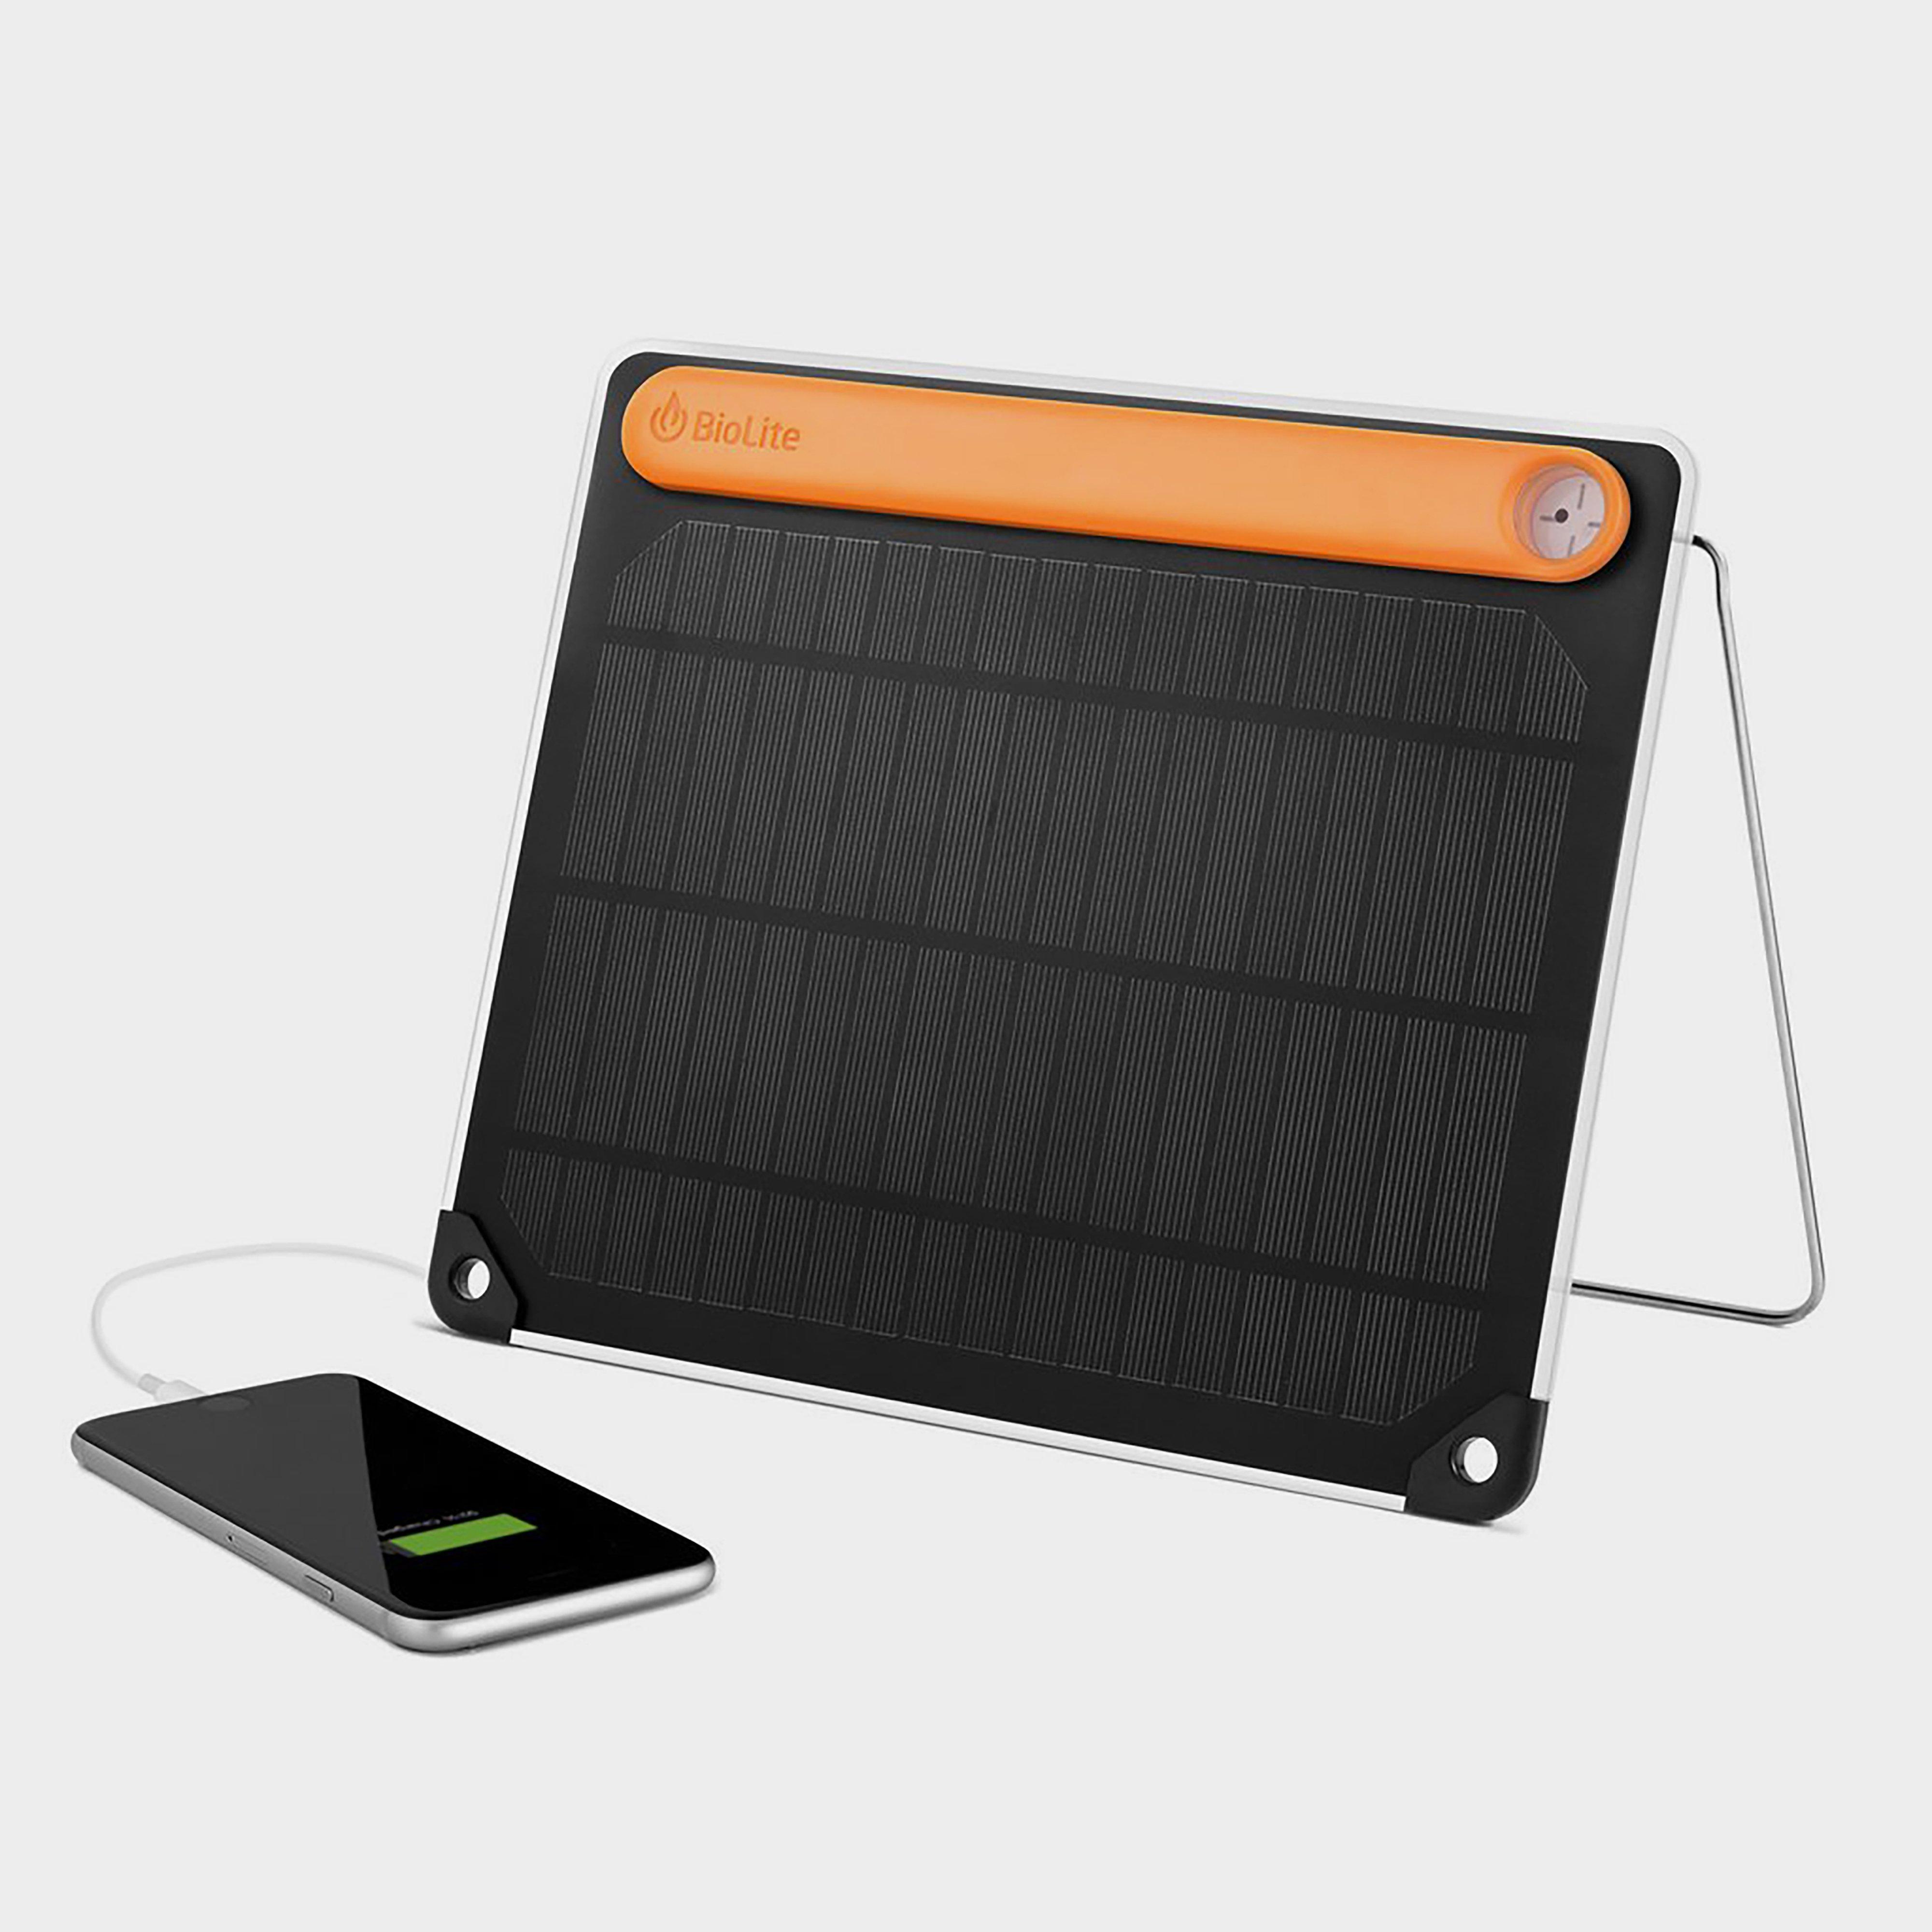 Biolite Solarpanel 5+ - Black/orange  Black/orange